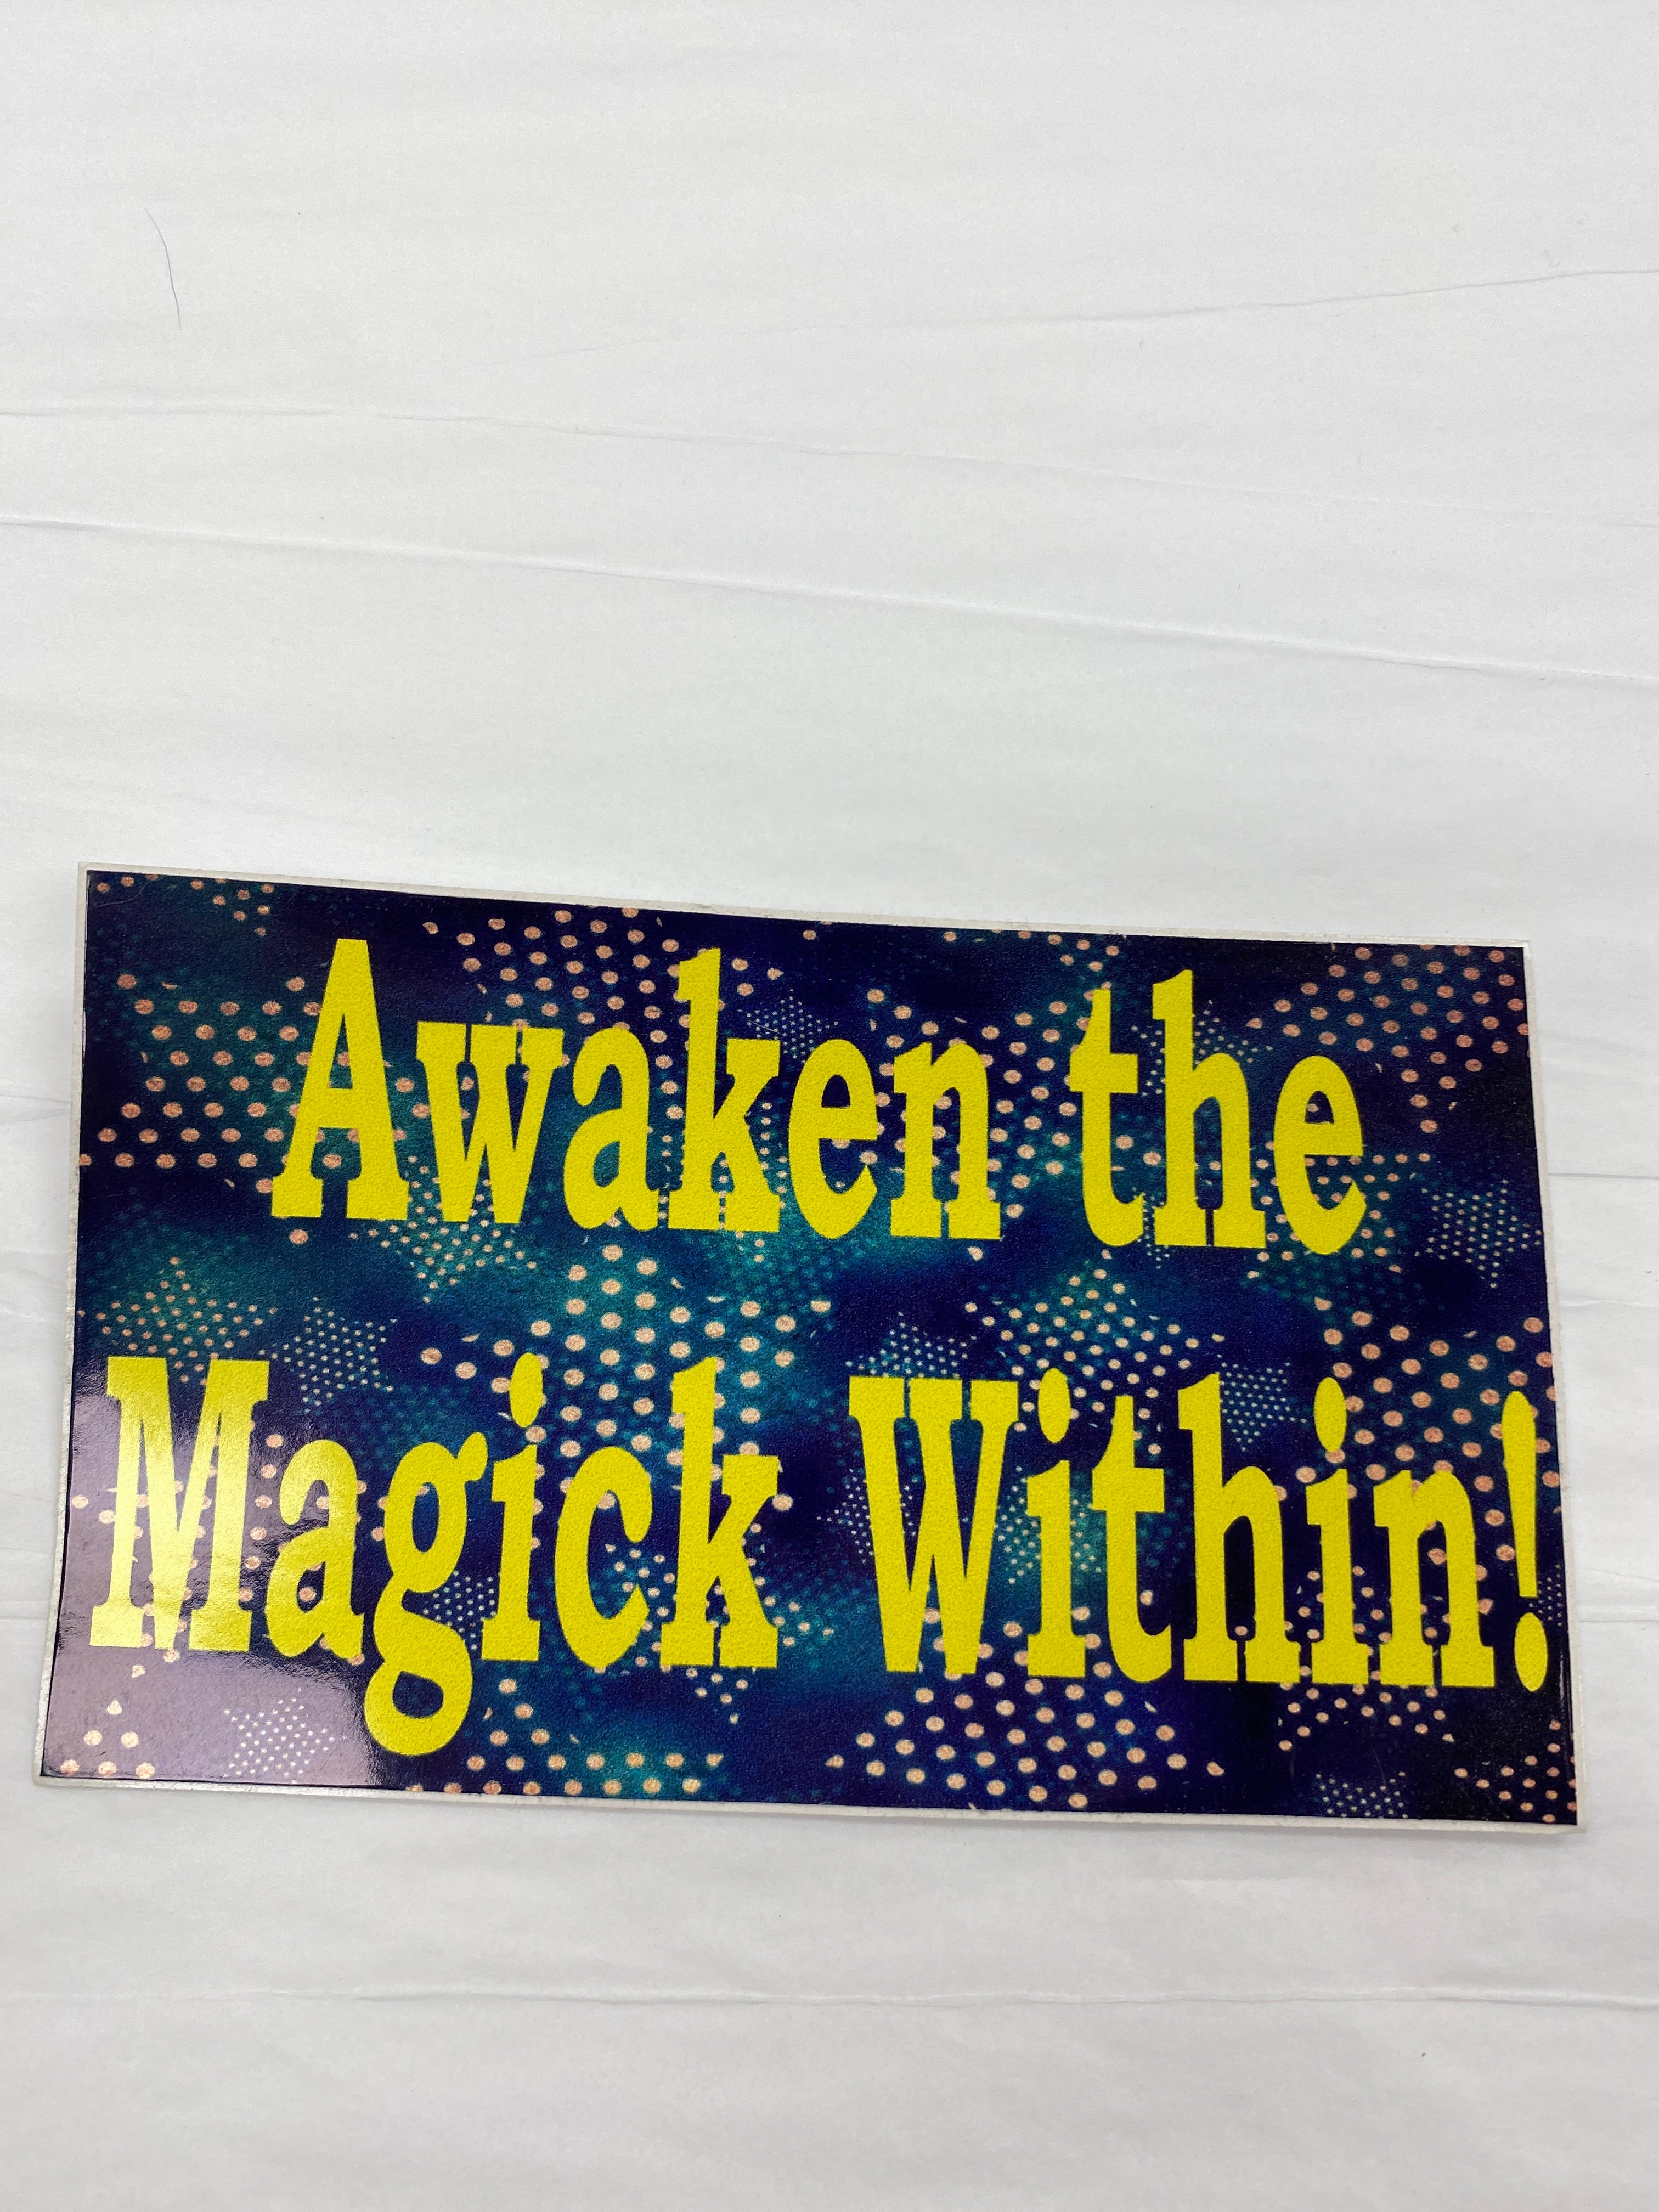 Awaken the Magick Within! Stickers